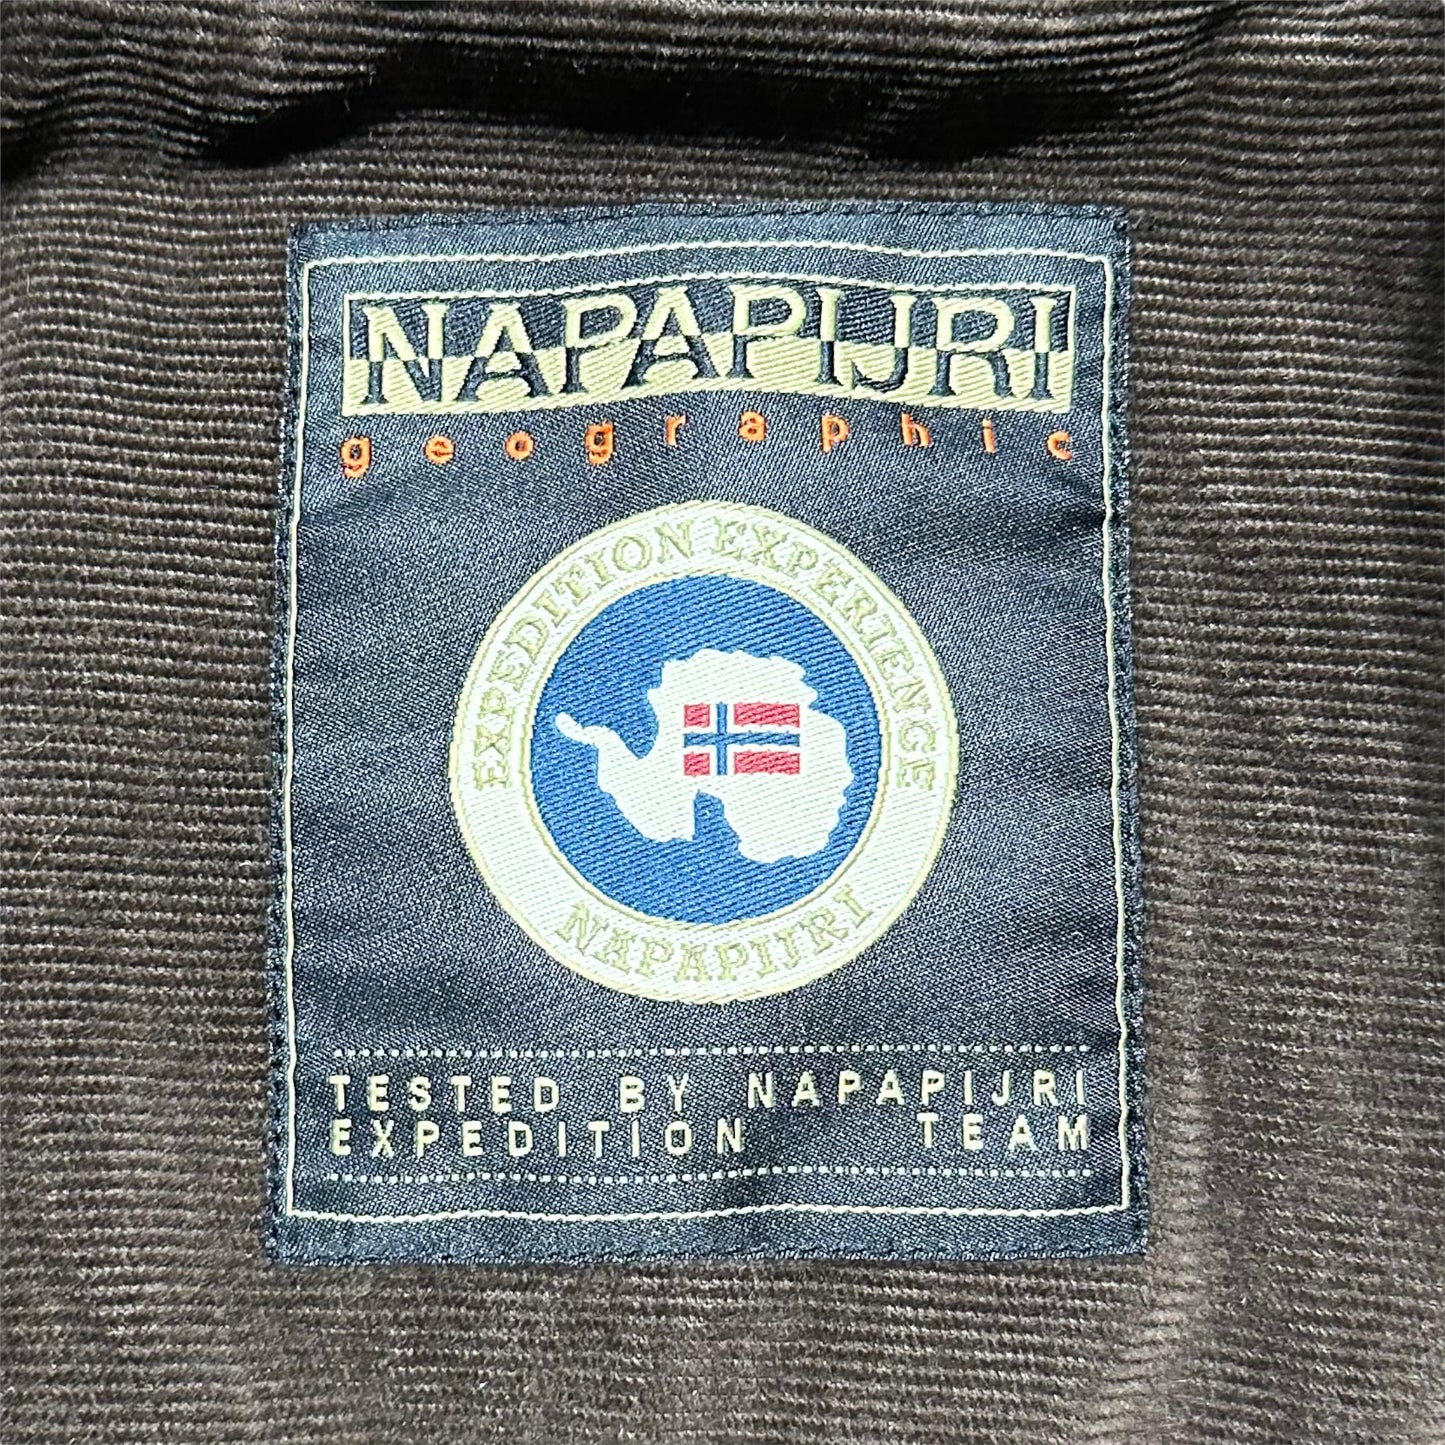 "NAPAPIJRI" G-1 type flight jacket